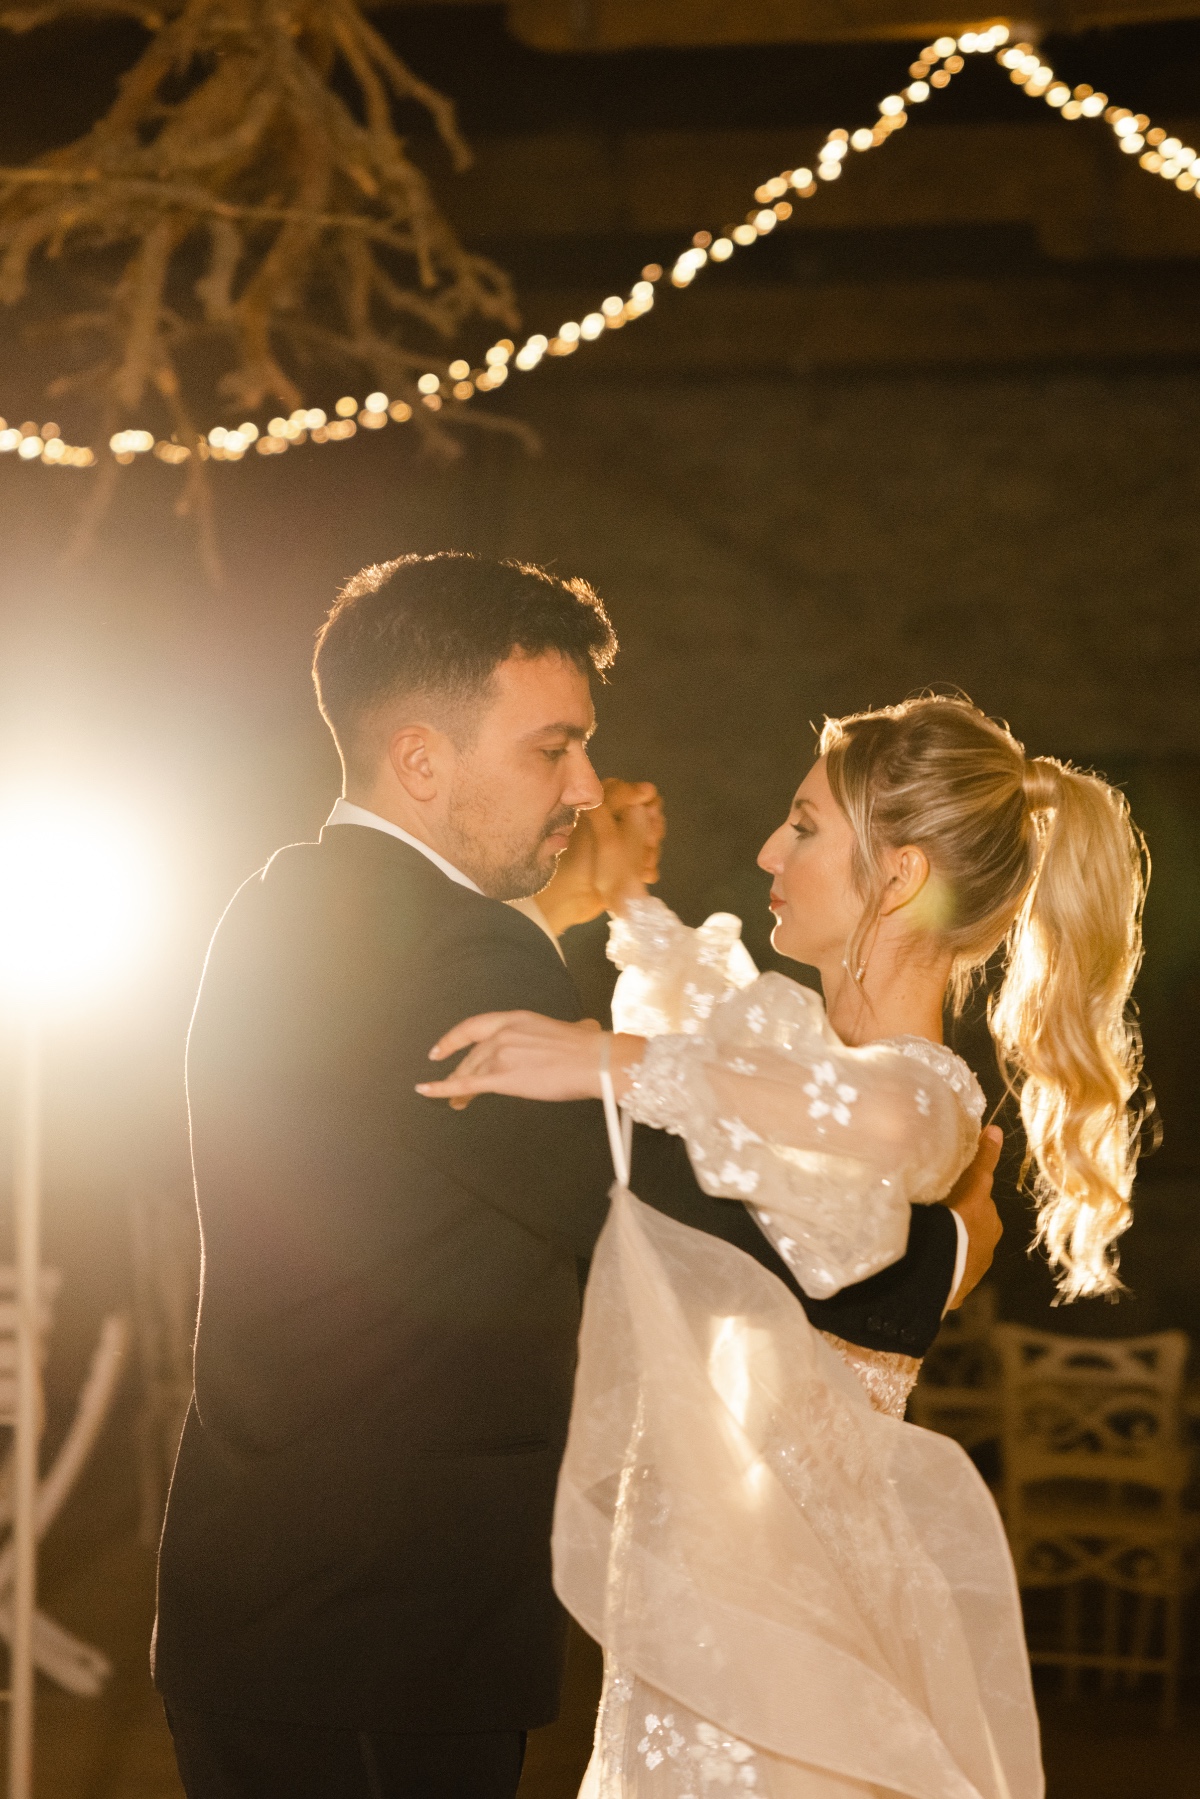 First dance waltz at romantic destination wedding in France